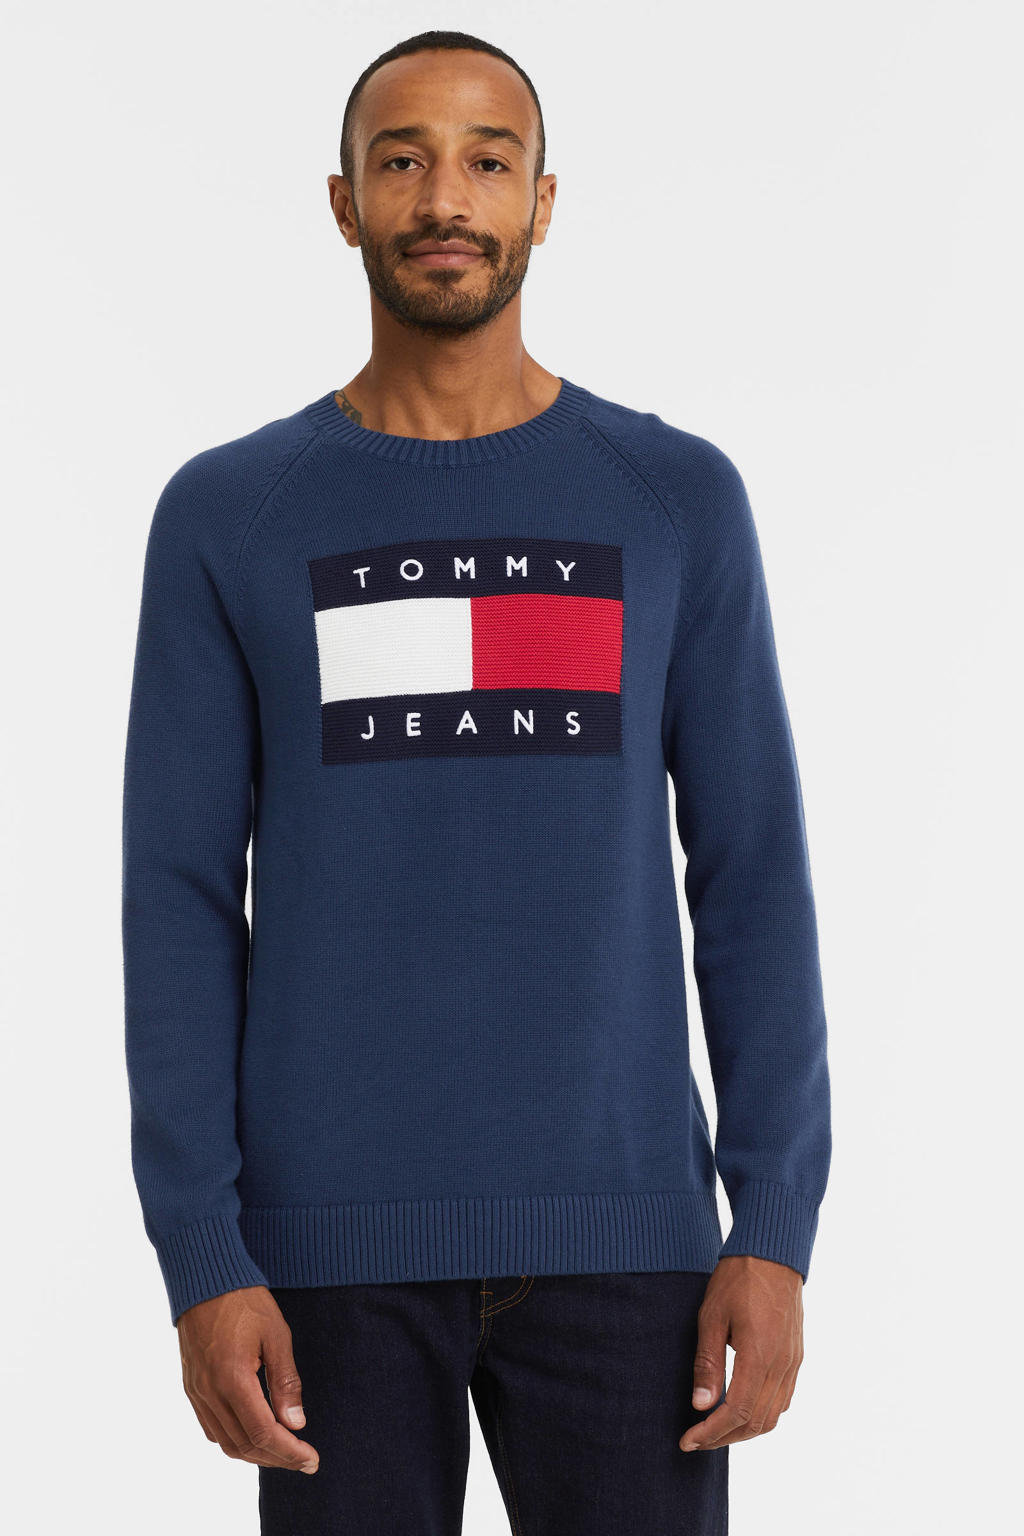 Tommy Jeans trui met logo twilight navy